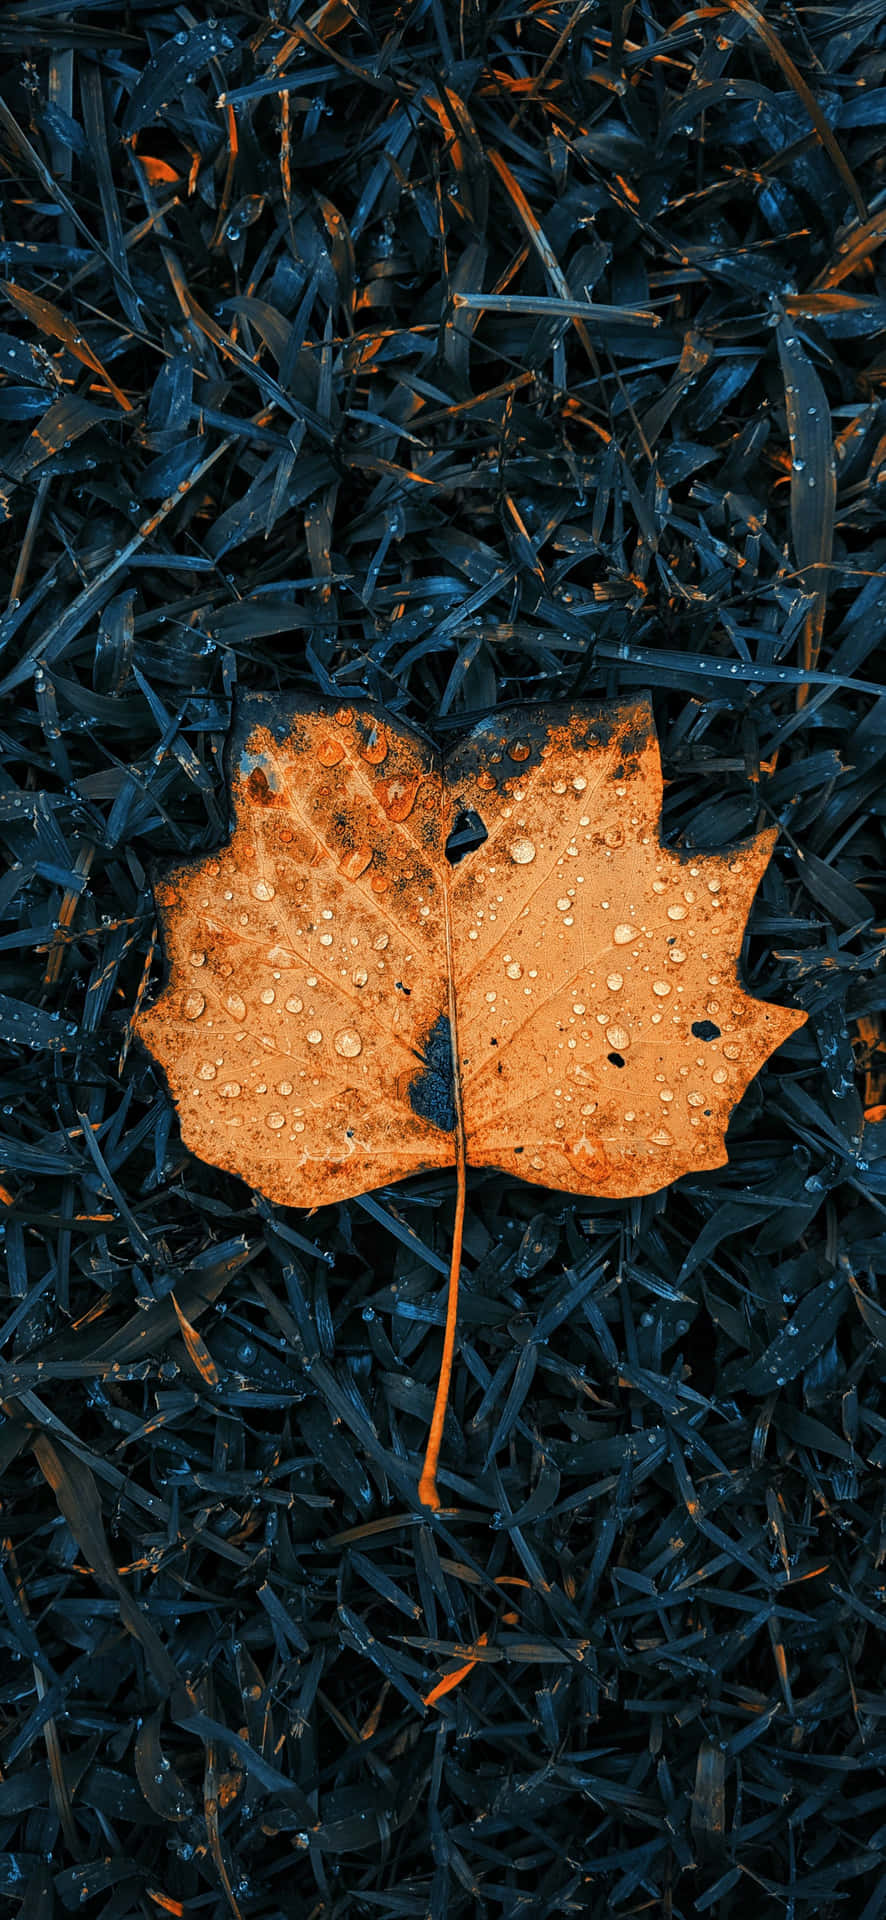 Scattered Fallen Leaves on Rustic Forest Floor Wallpaper